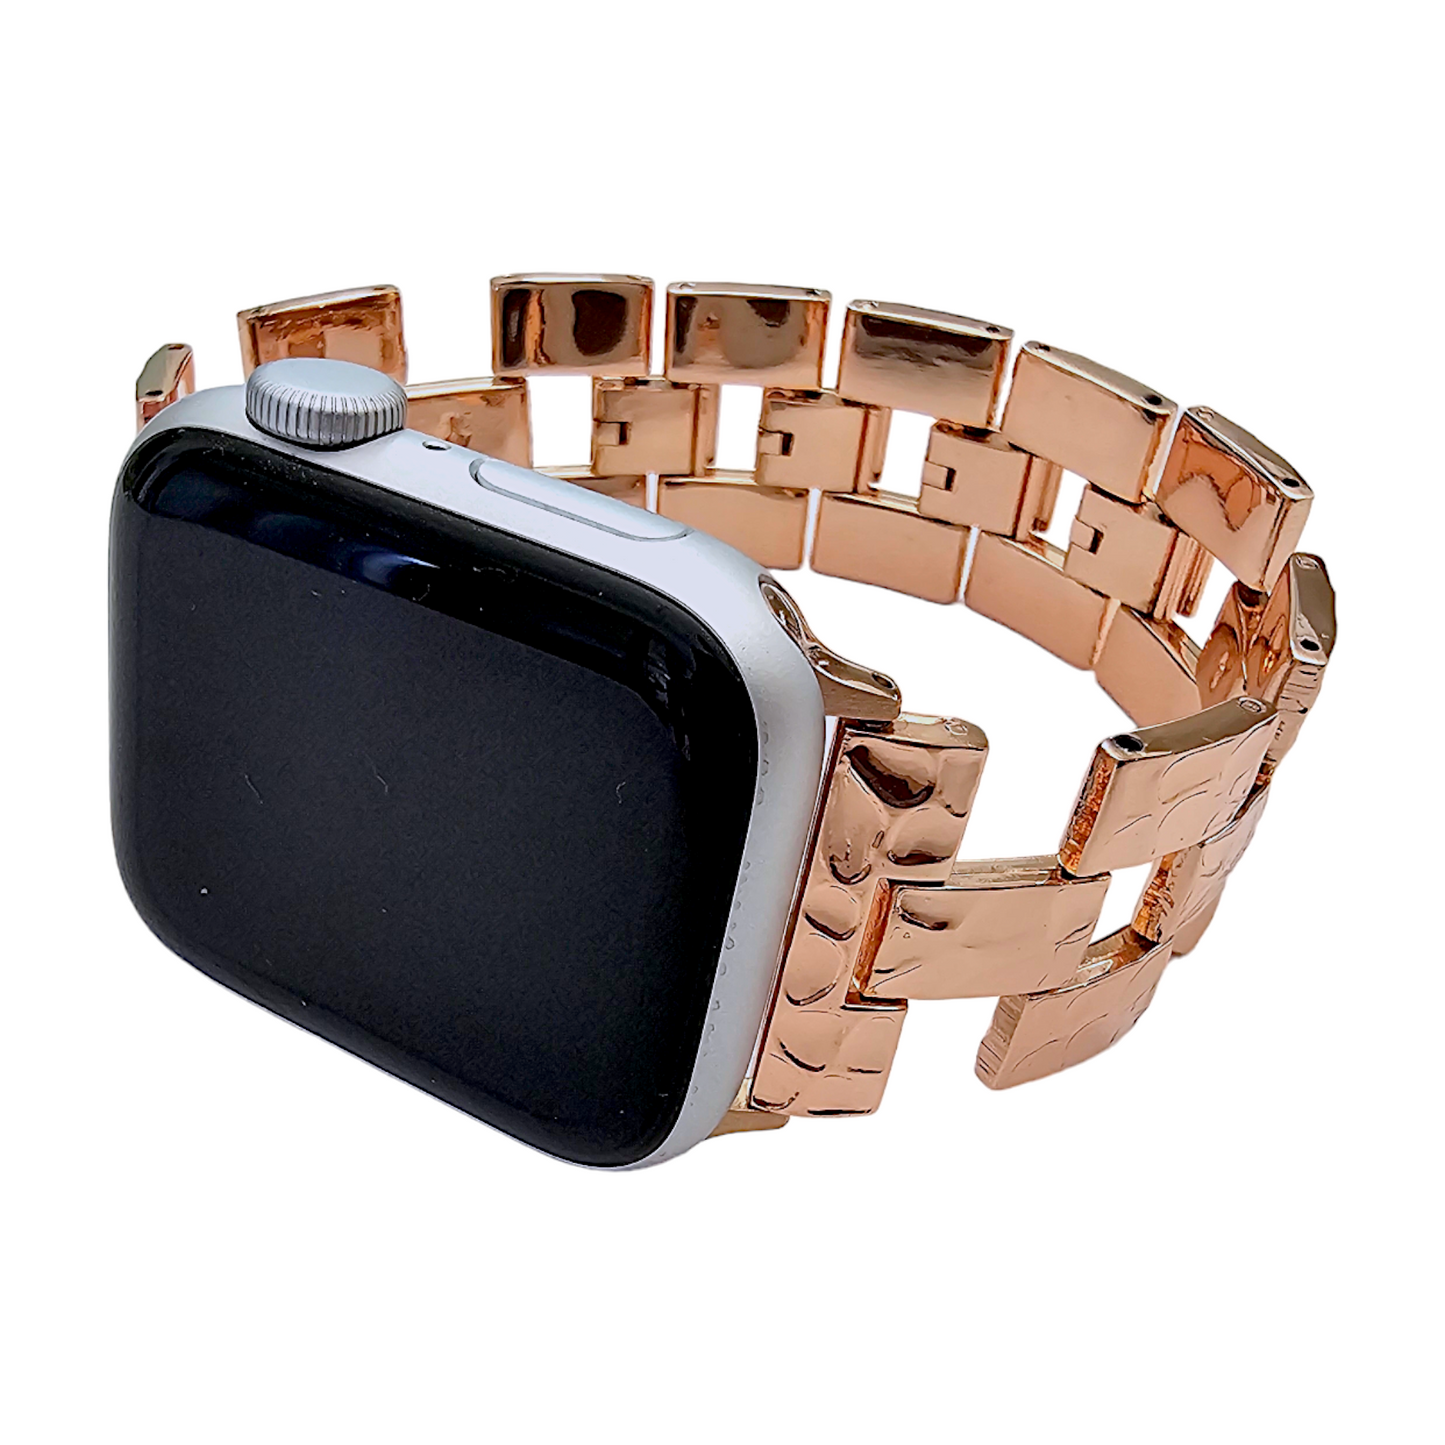 Rose Gold Crushed metal bracelet for Apple Watch Strap Band